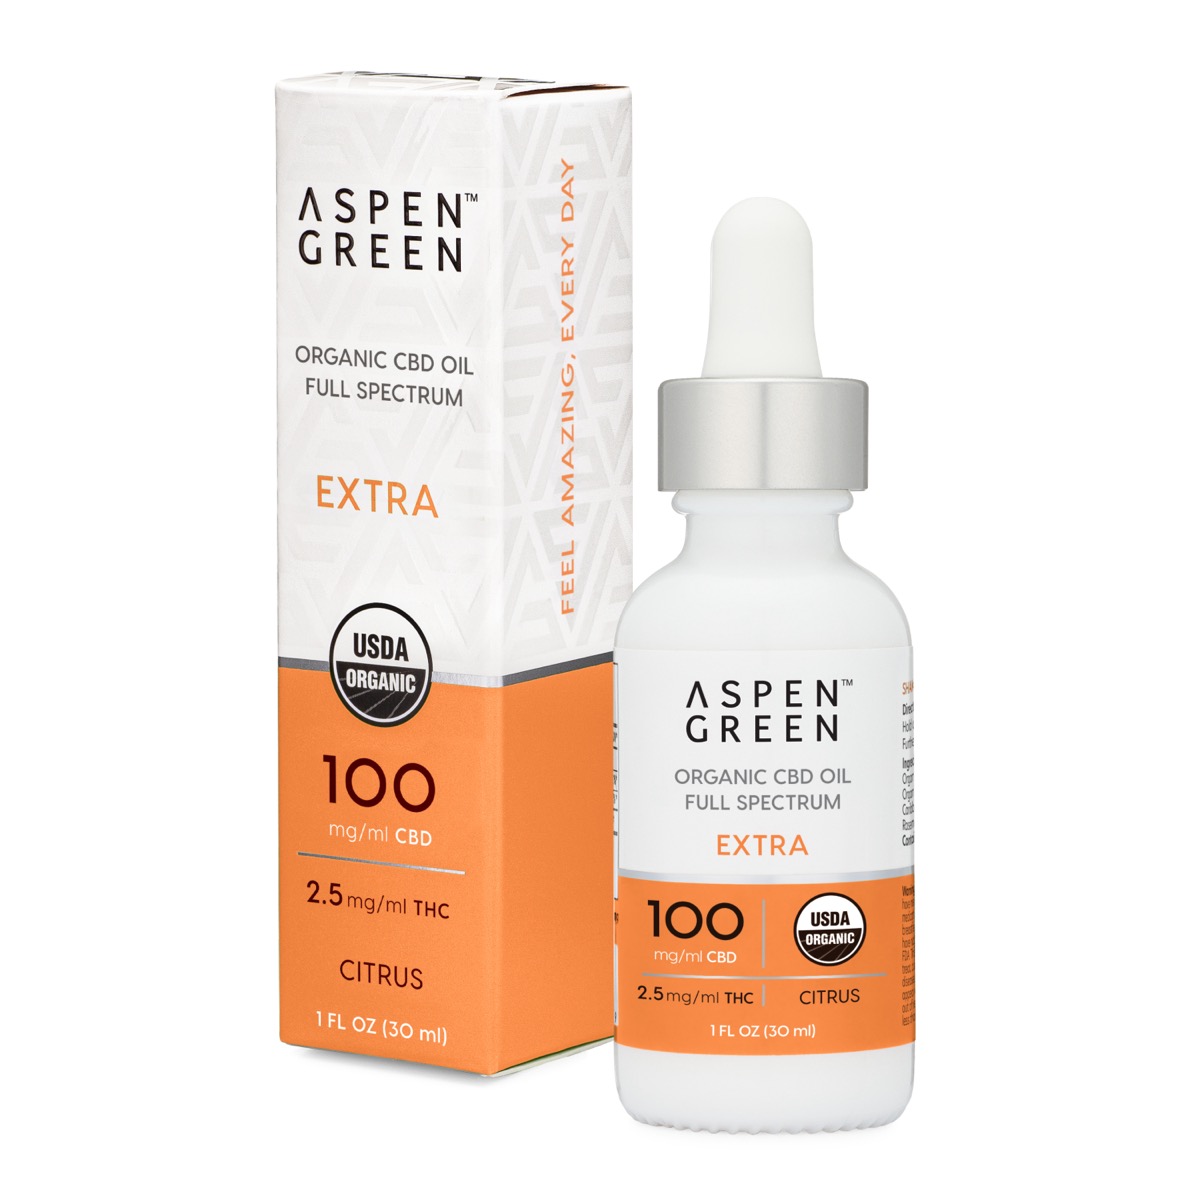 Aspen Green Extra CBD Oil Tincture & Box - USDA Certified Organic, 100mg/ml CBD, Citrus Flavor